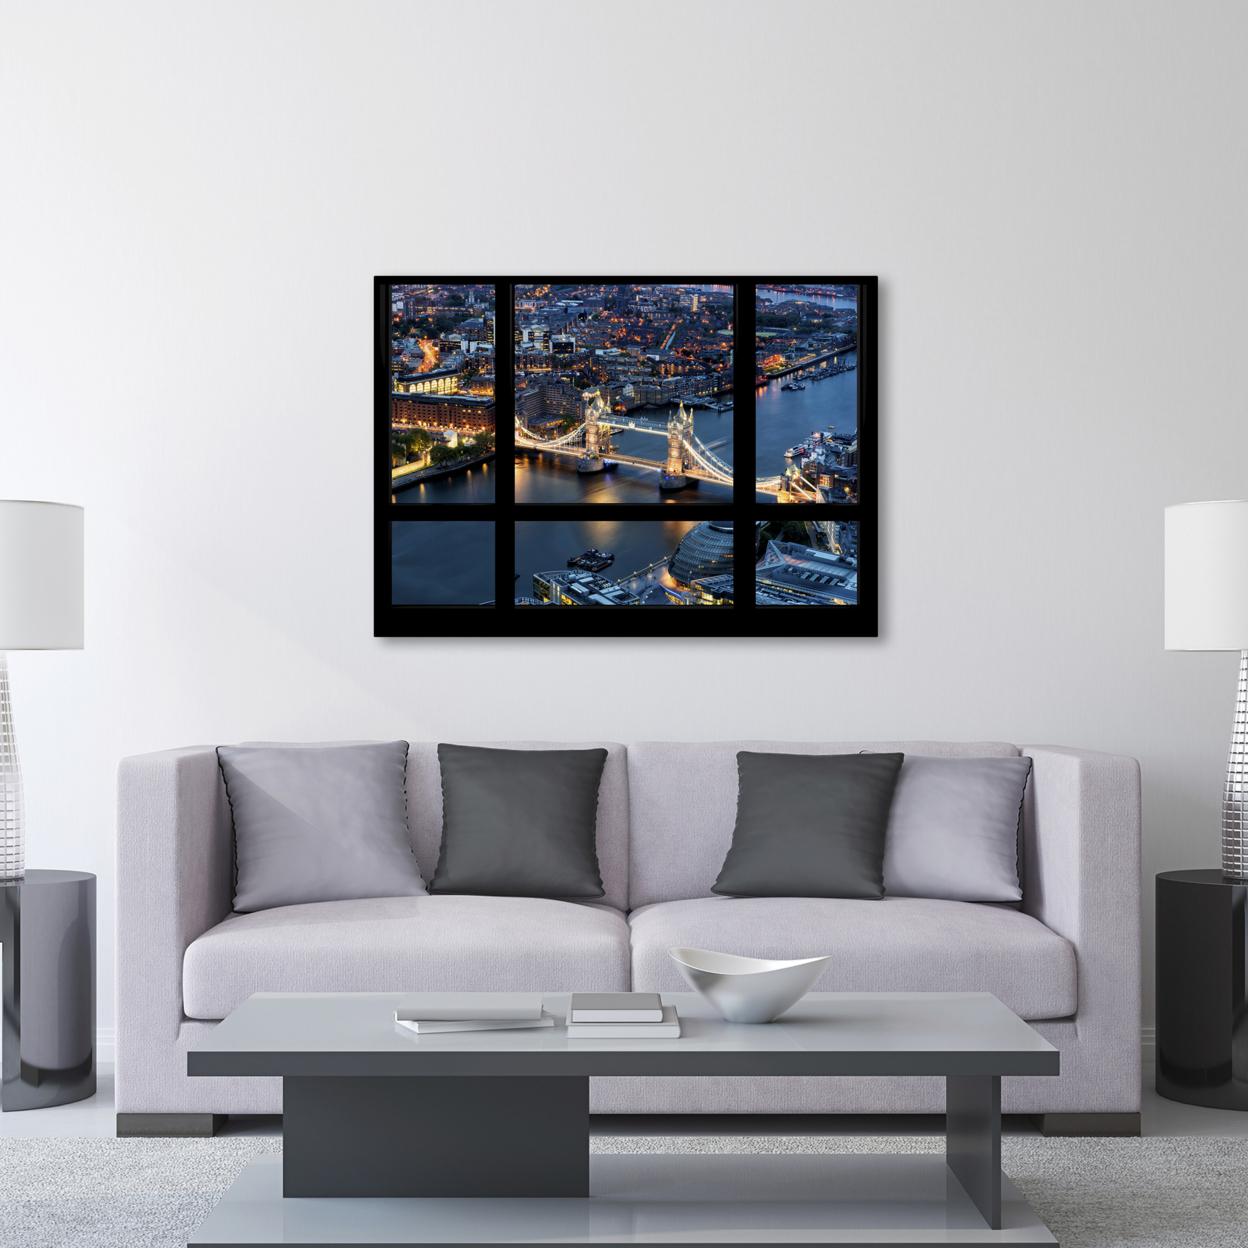 Philippe Hugonnard 'Window View London Bridge 2' Canvas Wall Art 35 X 47 Inches